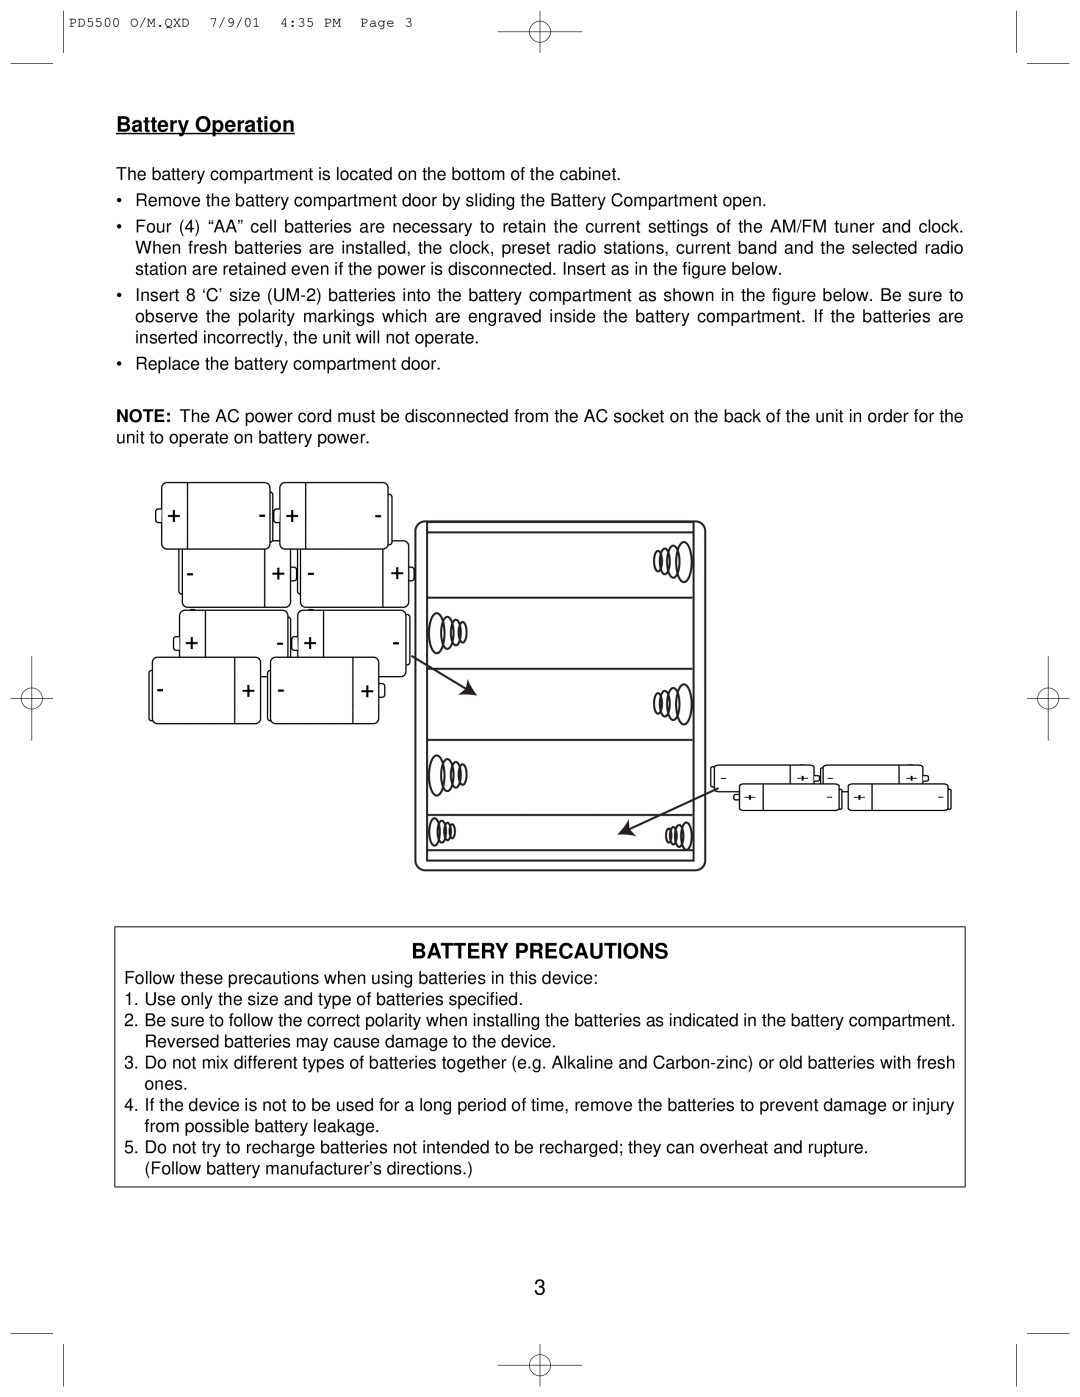 Emerson PD5500 instruction manual Battery Operation, Battery Precautions 